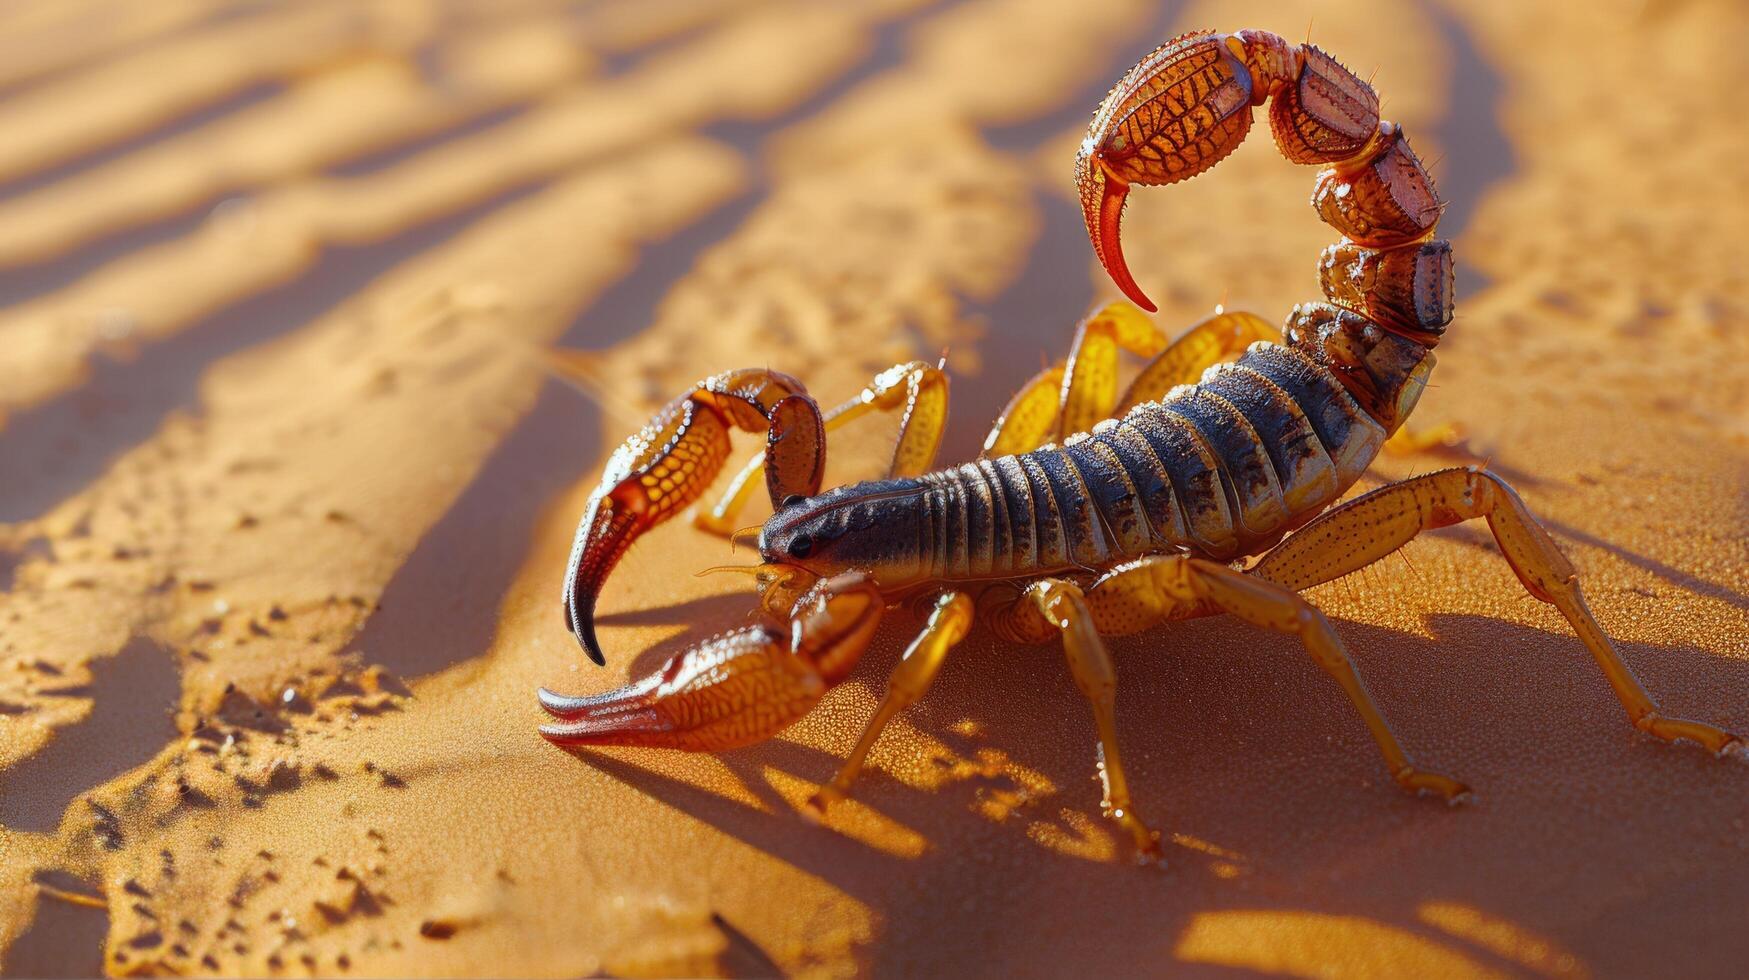 Scorpion Observing Surroundings on Sandy Terrain photo